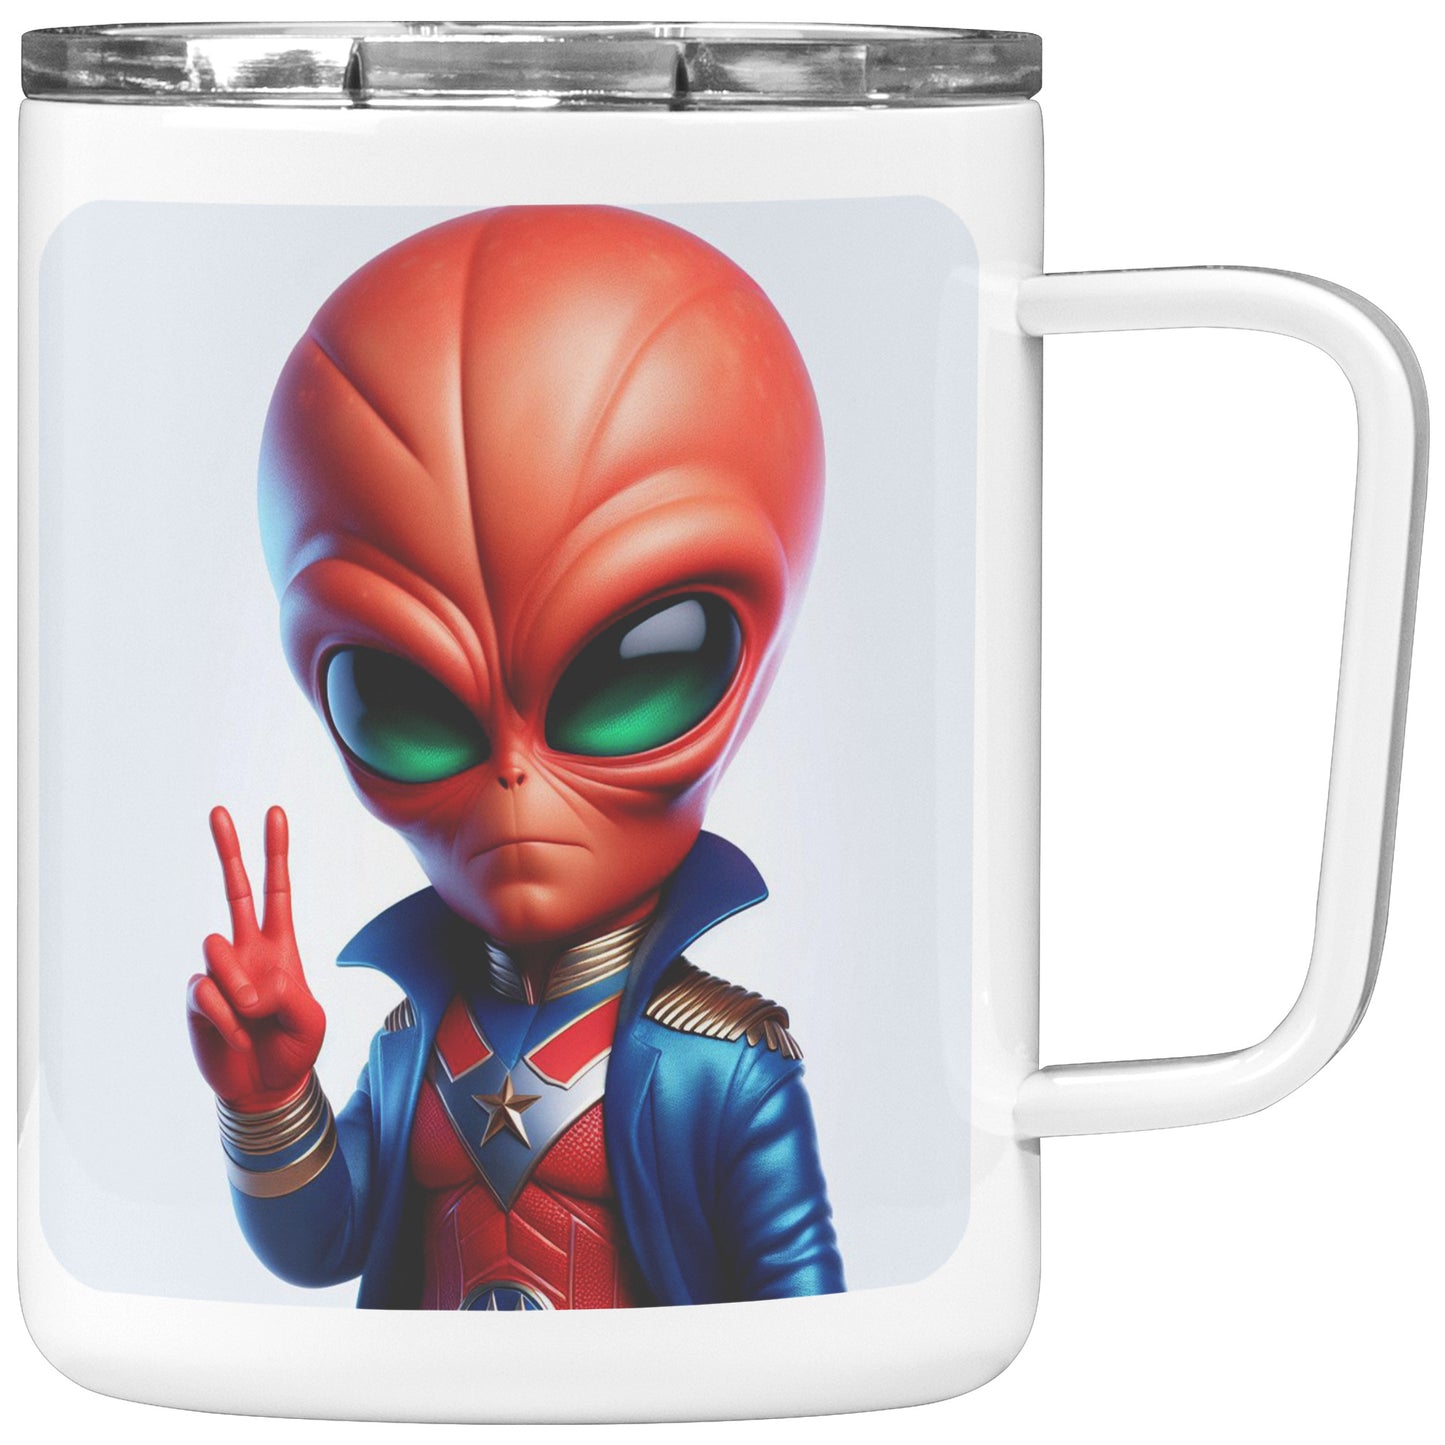 Martian Alien Caricature - Coffee Mug #3